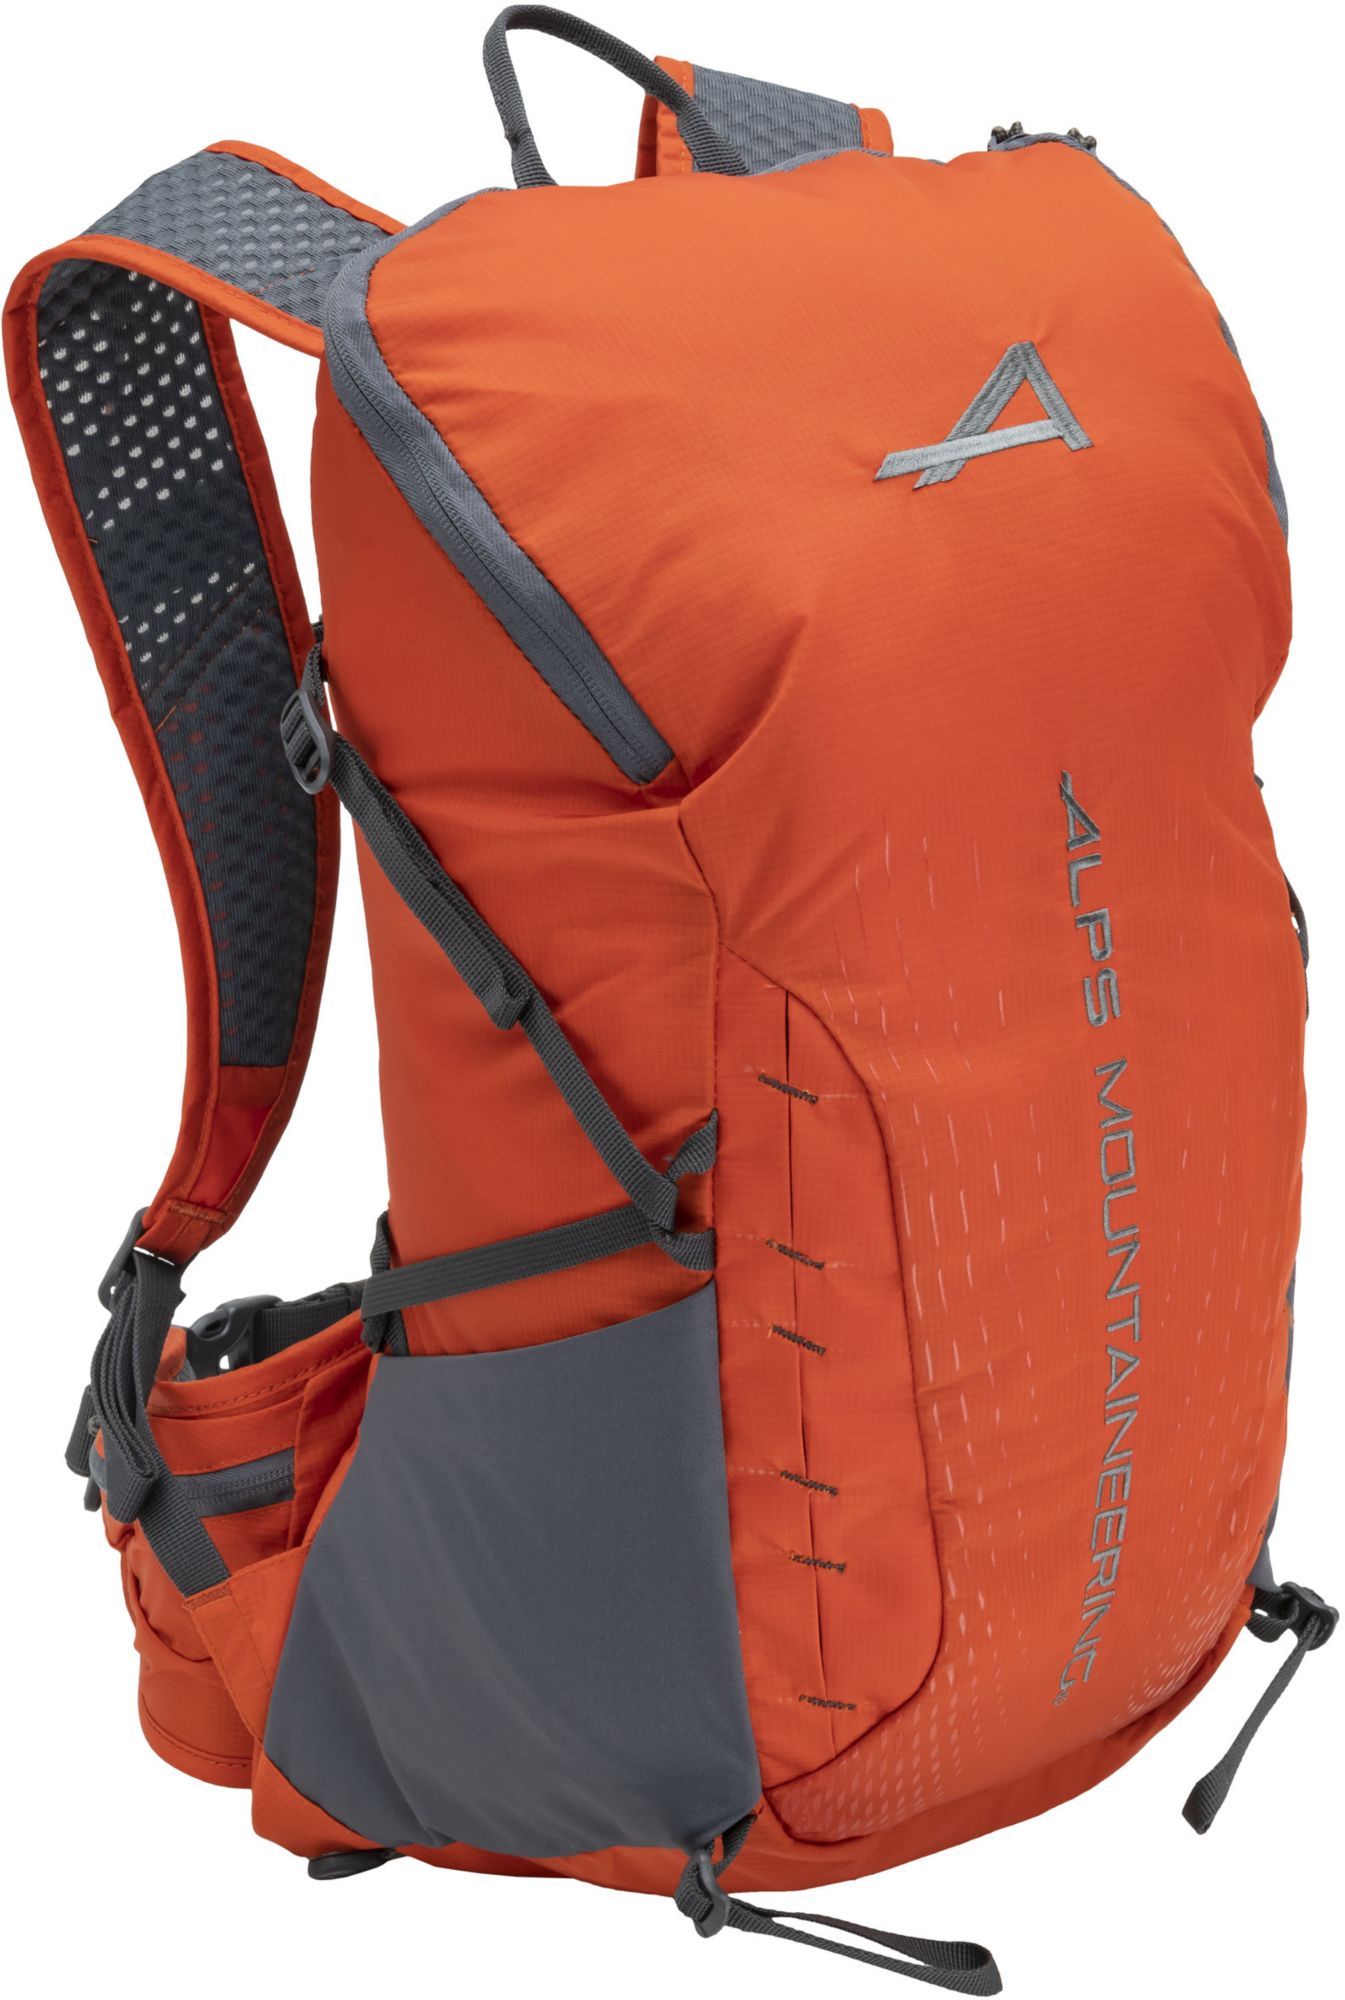 alps mountaineering bag